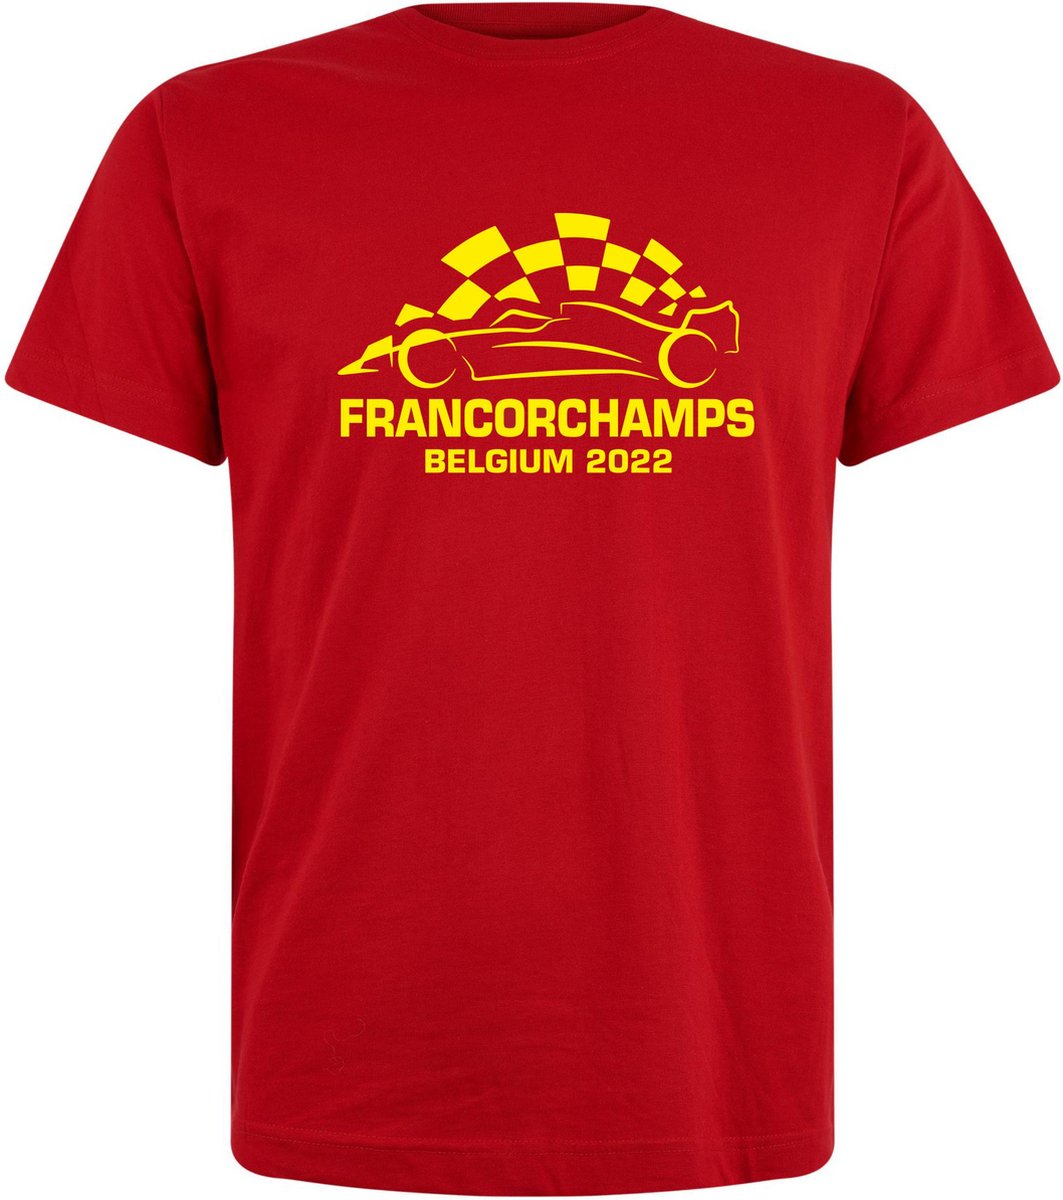 T-shirt kinderen Francorchamps Belgium 2022 met raceauto | Max Verstappen / Red Bull Racing / Formule 1 fan | Grand Prix Circuit Spa-Francorchamps | kleding shirt | Rood | maat 68